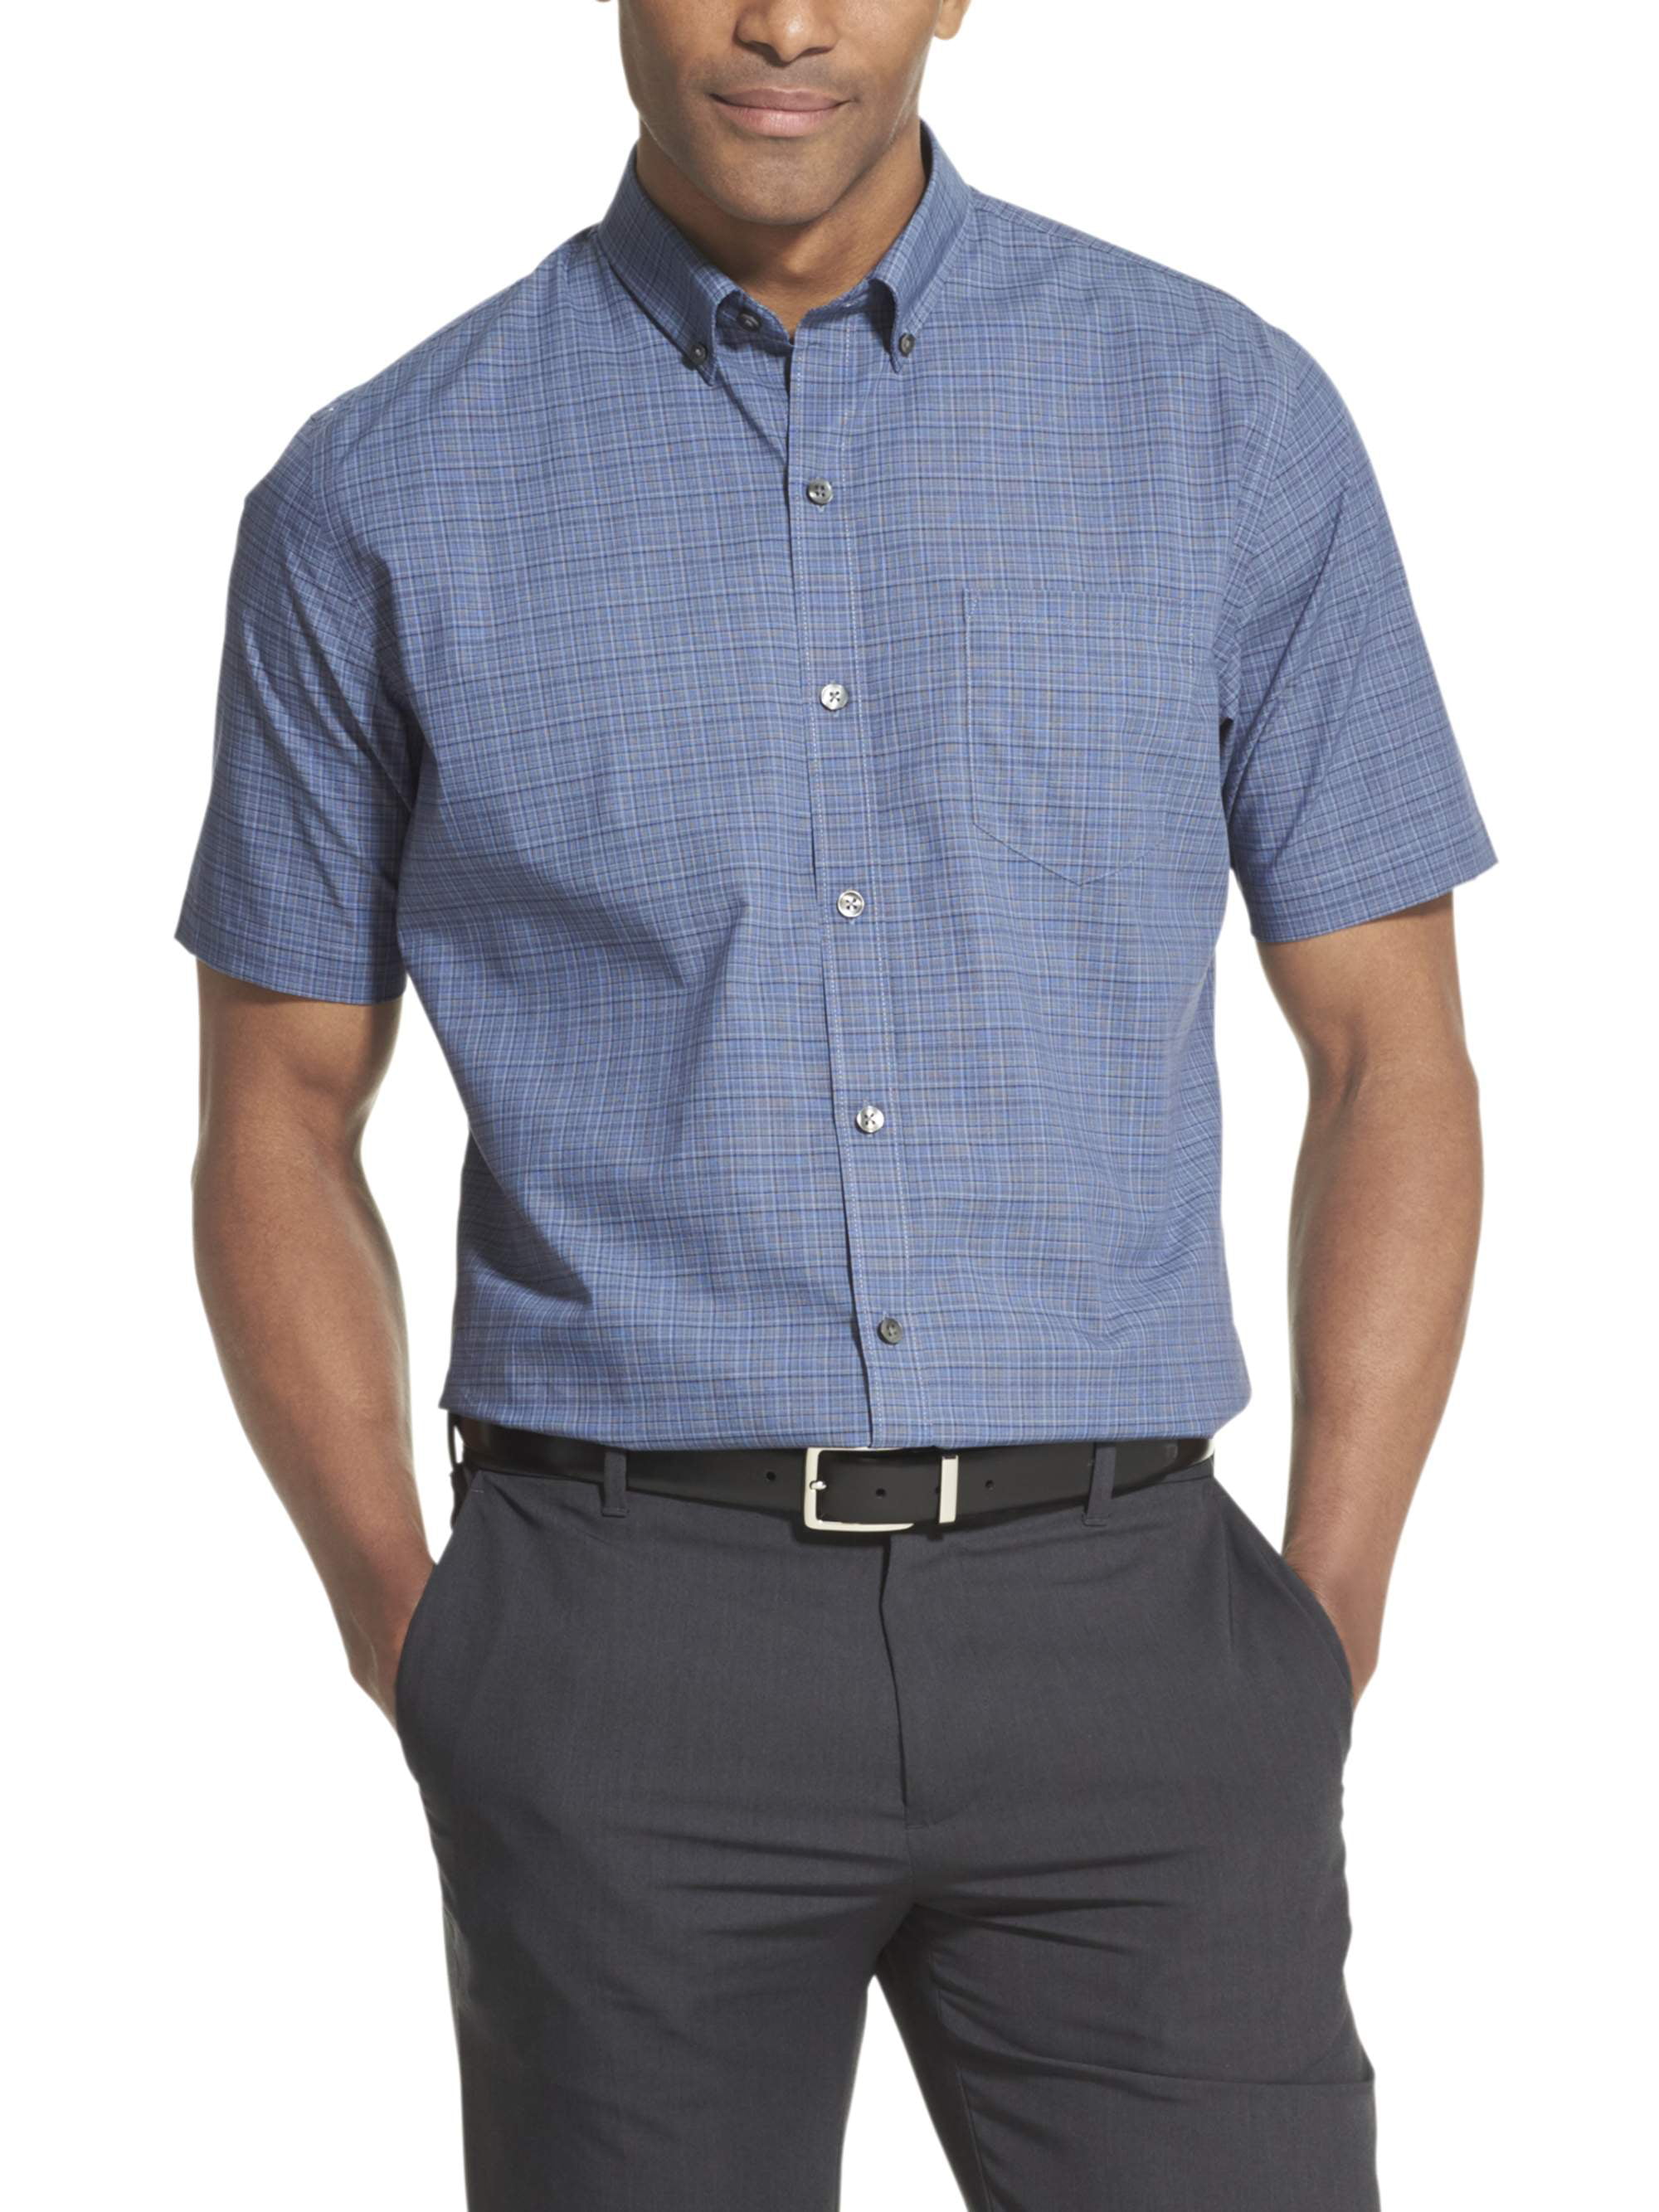 Van Heusen Men's Big and Tall Flex Non Iron Short Sleeve Shirt - Walmart.com